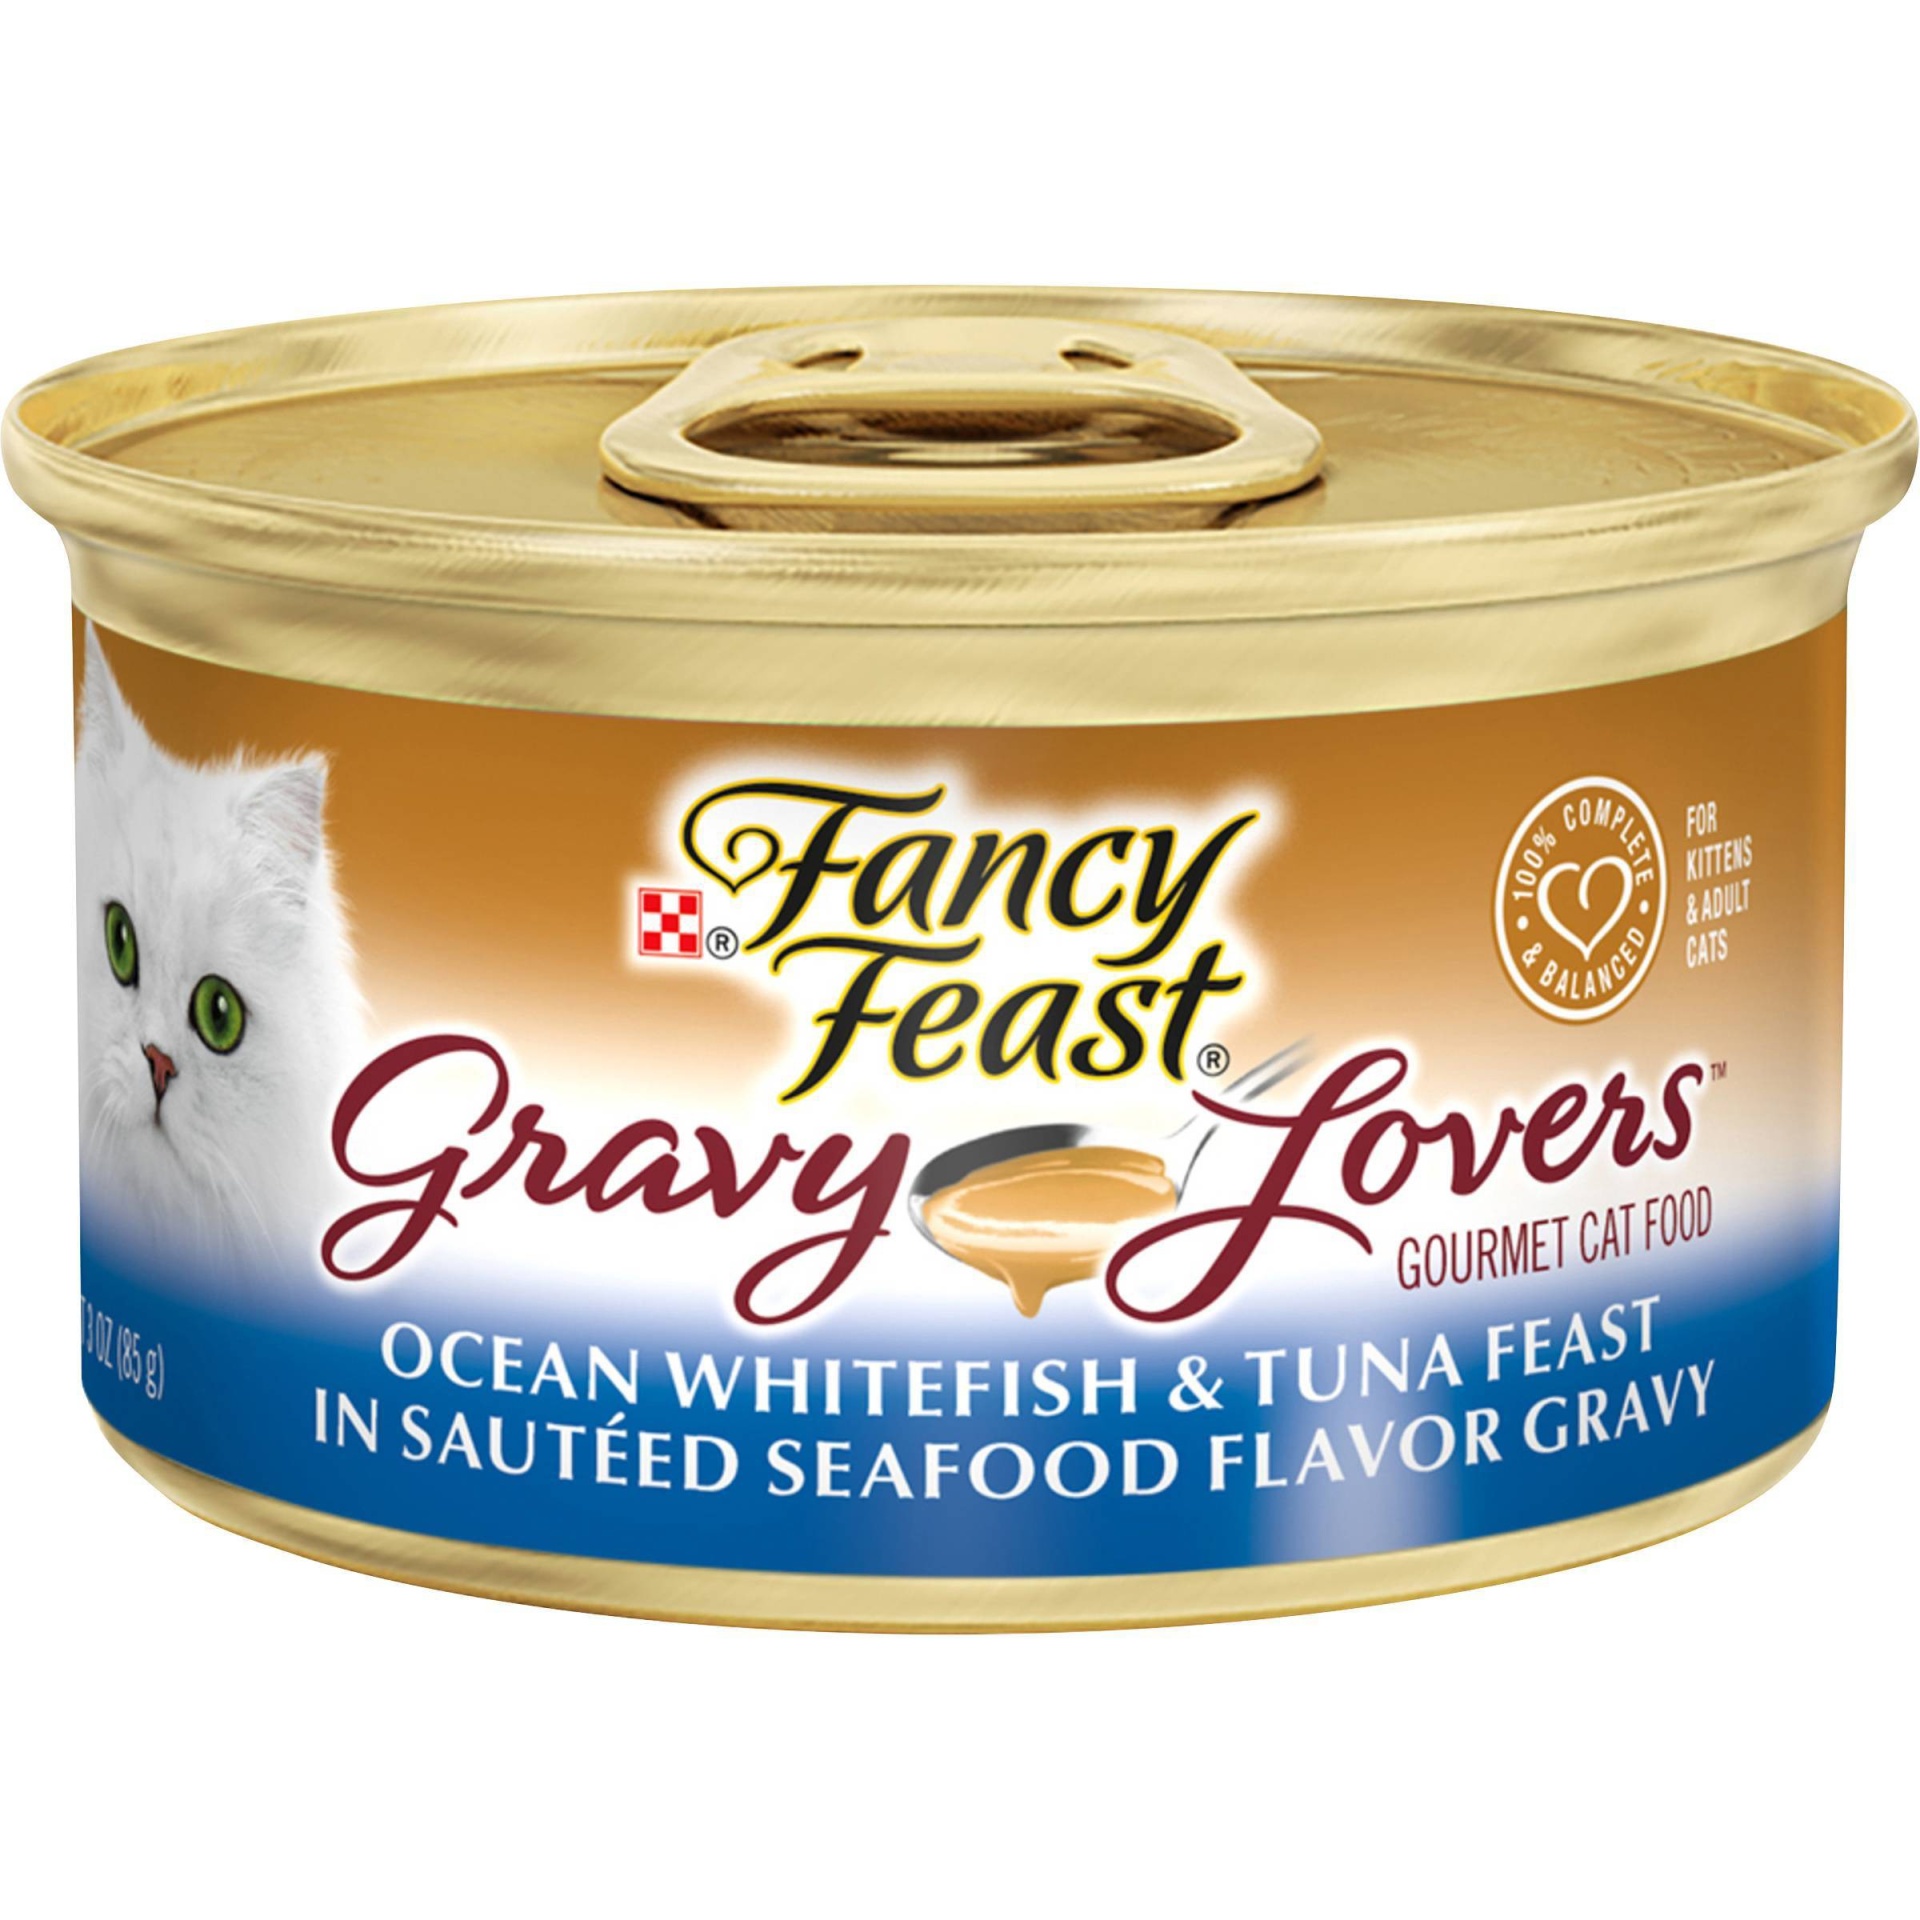 slide 1 of 5, Fancy Feast Gravy Lovers Ocean Whitefish & Tuna Feast in Sauteed Seafood Flavor Gravy Cat Food, 3 oz